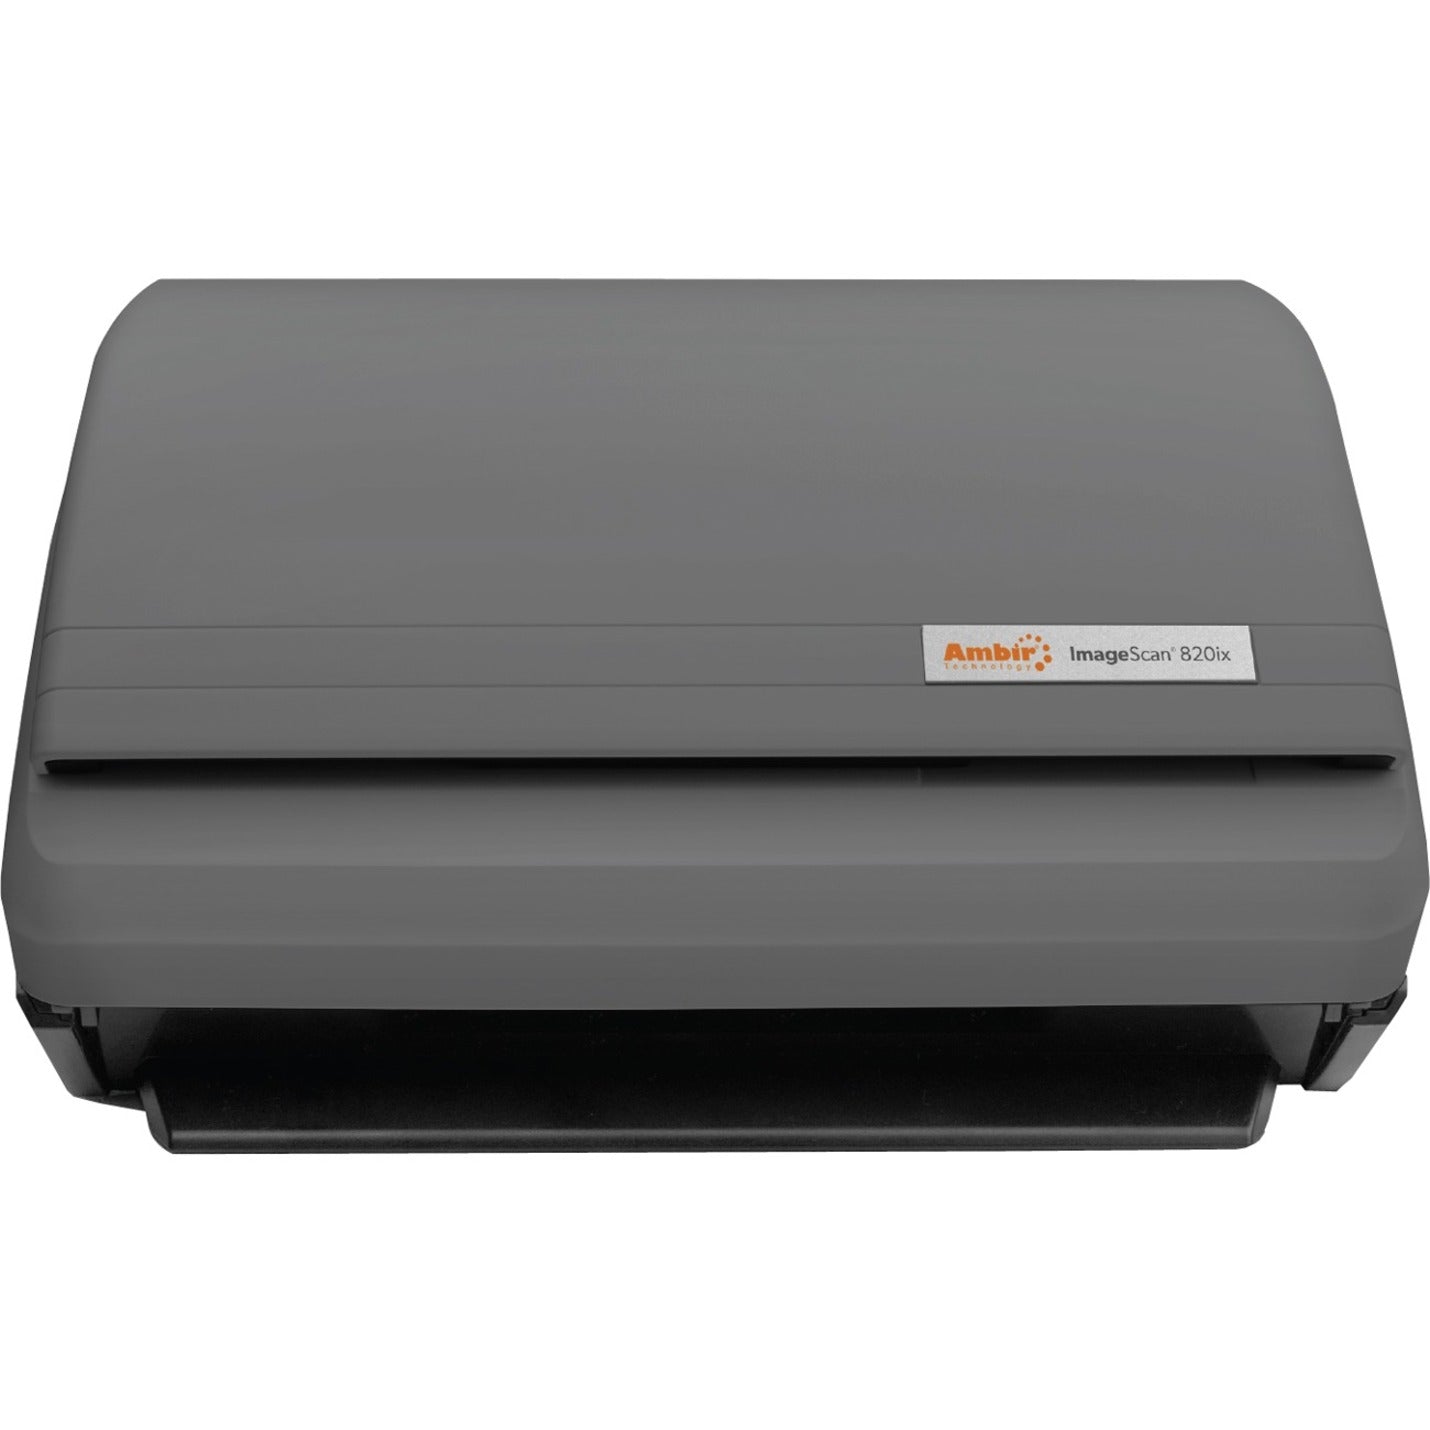 Ambir DS820ix-AS ImageScan Pro 820ix Sheetfed Scanner, Color, Duplex Scanning, 600 dpi Optical Resolution